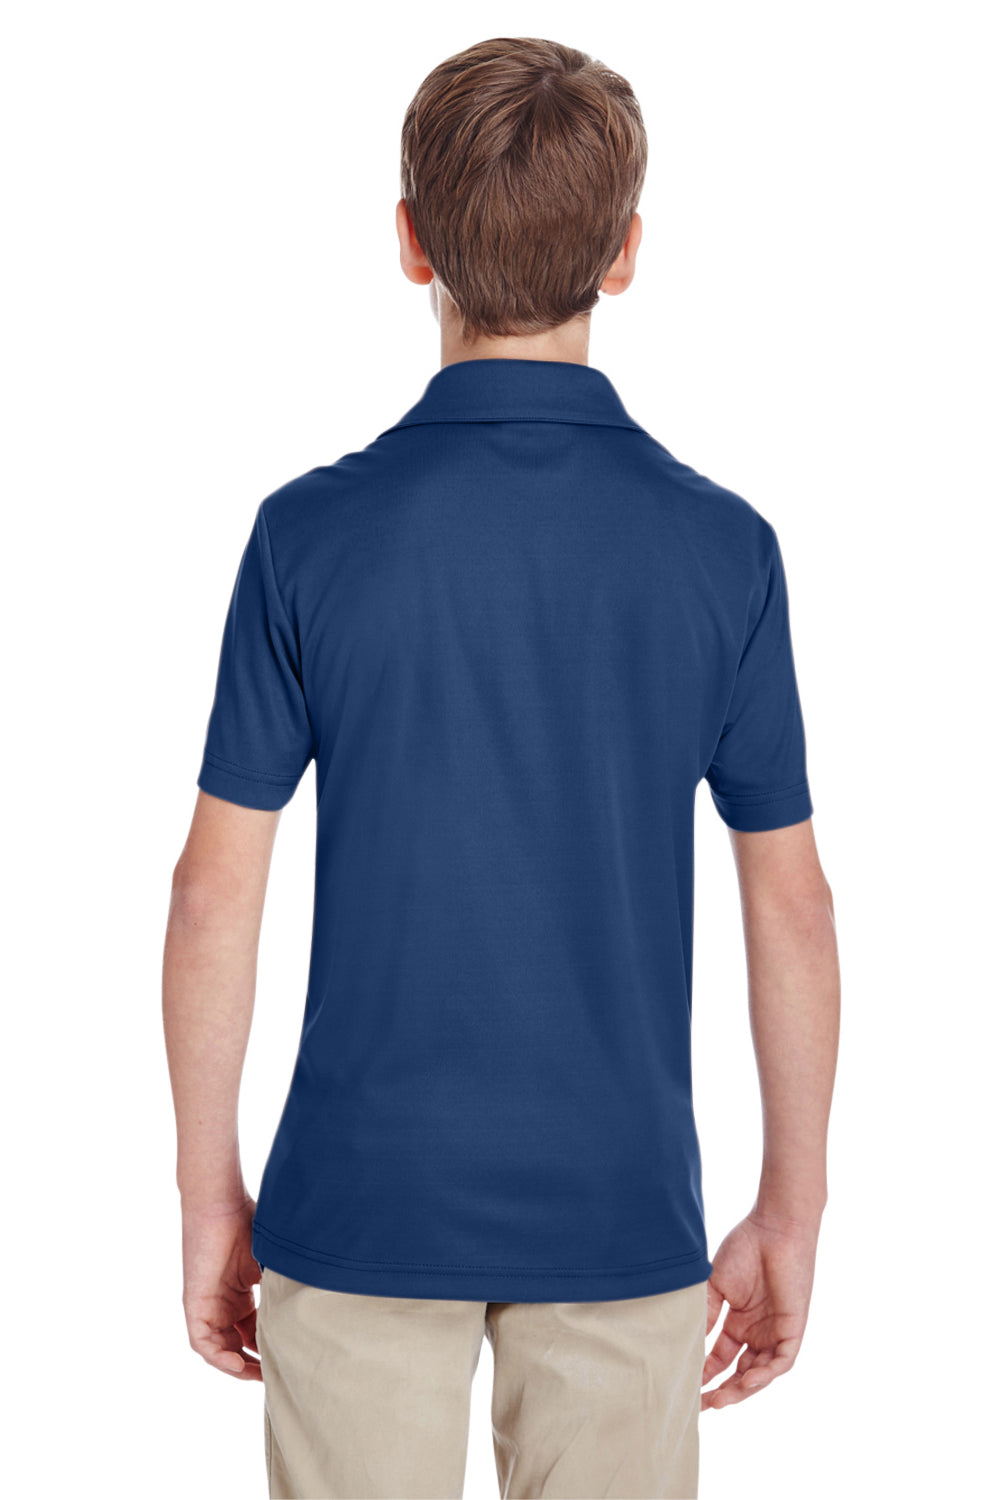 Team 365 TT51Y Youth Zone Performance Moisture Wicking Short Sleeve Polo Shirt Navy Blue Back